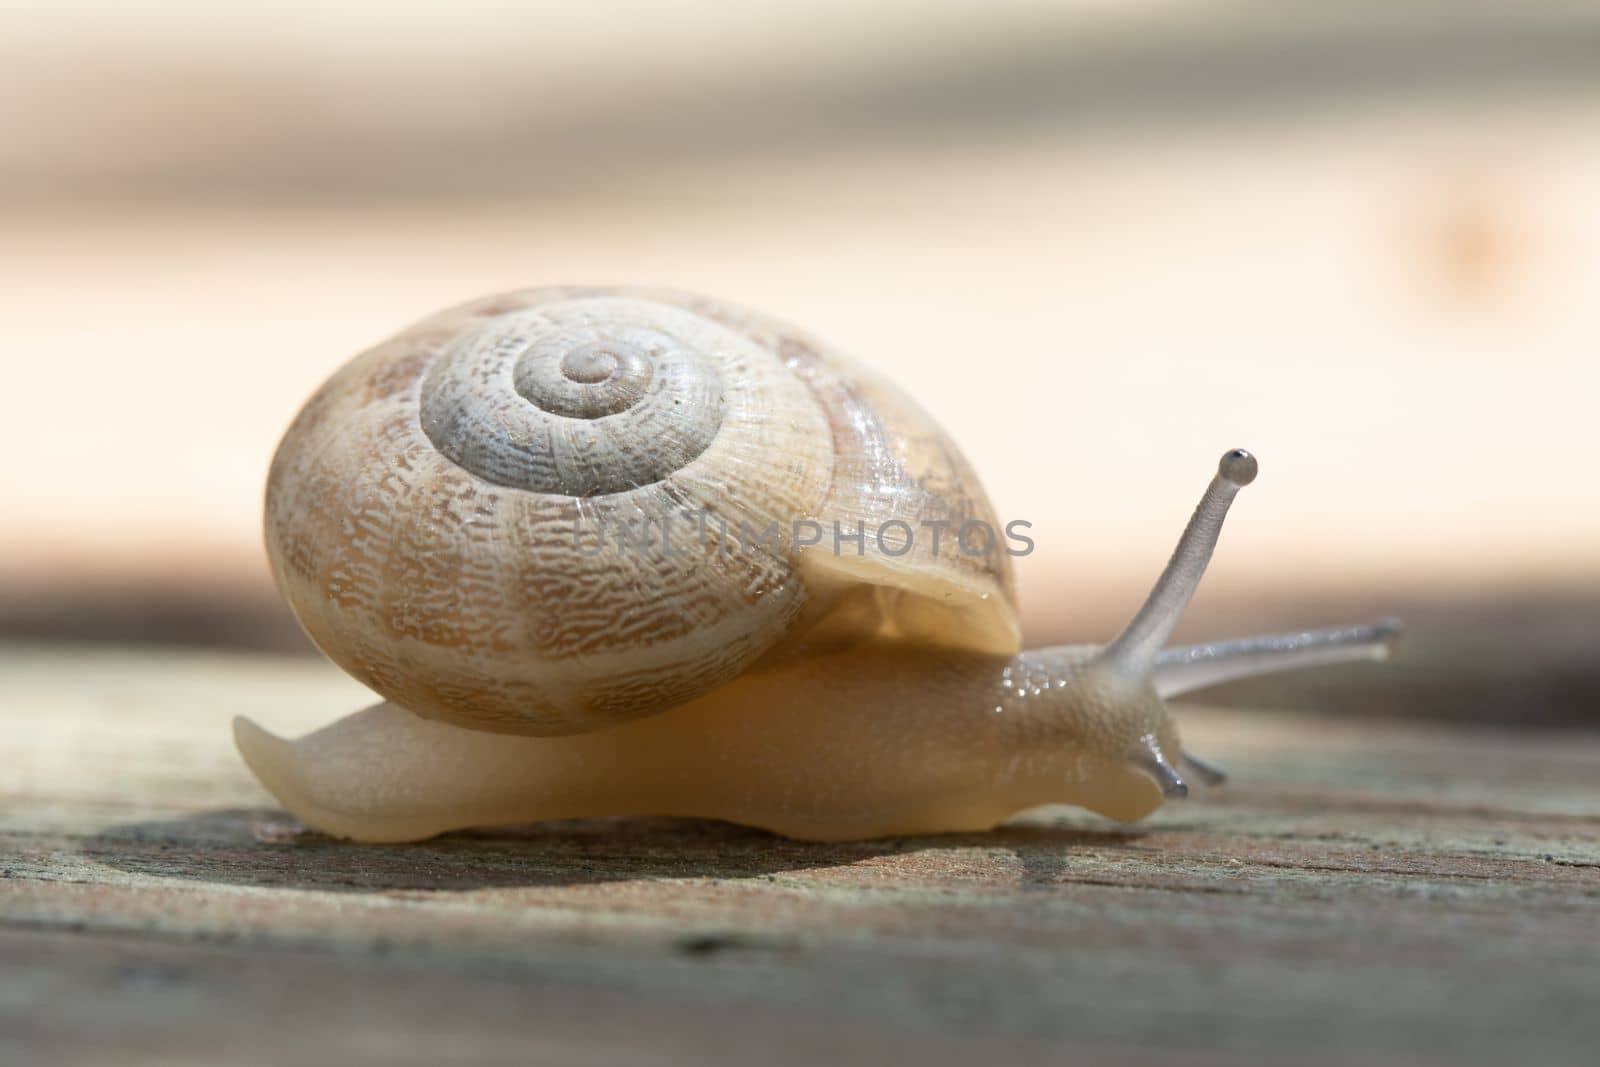 A brown garden snail on a wooden background by senkaya